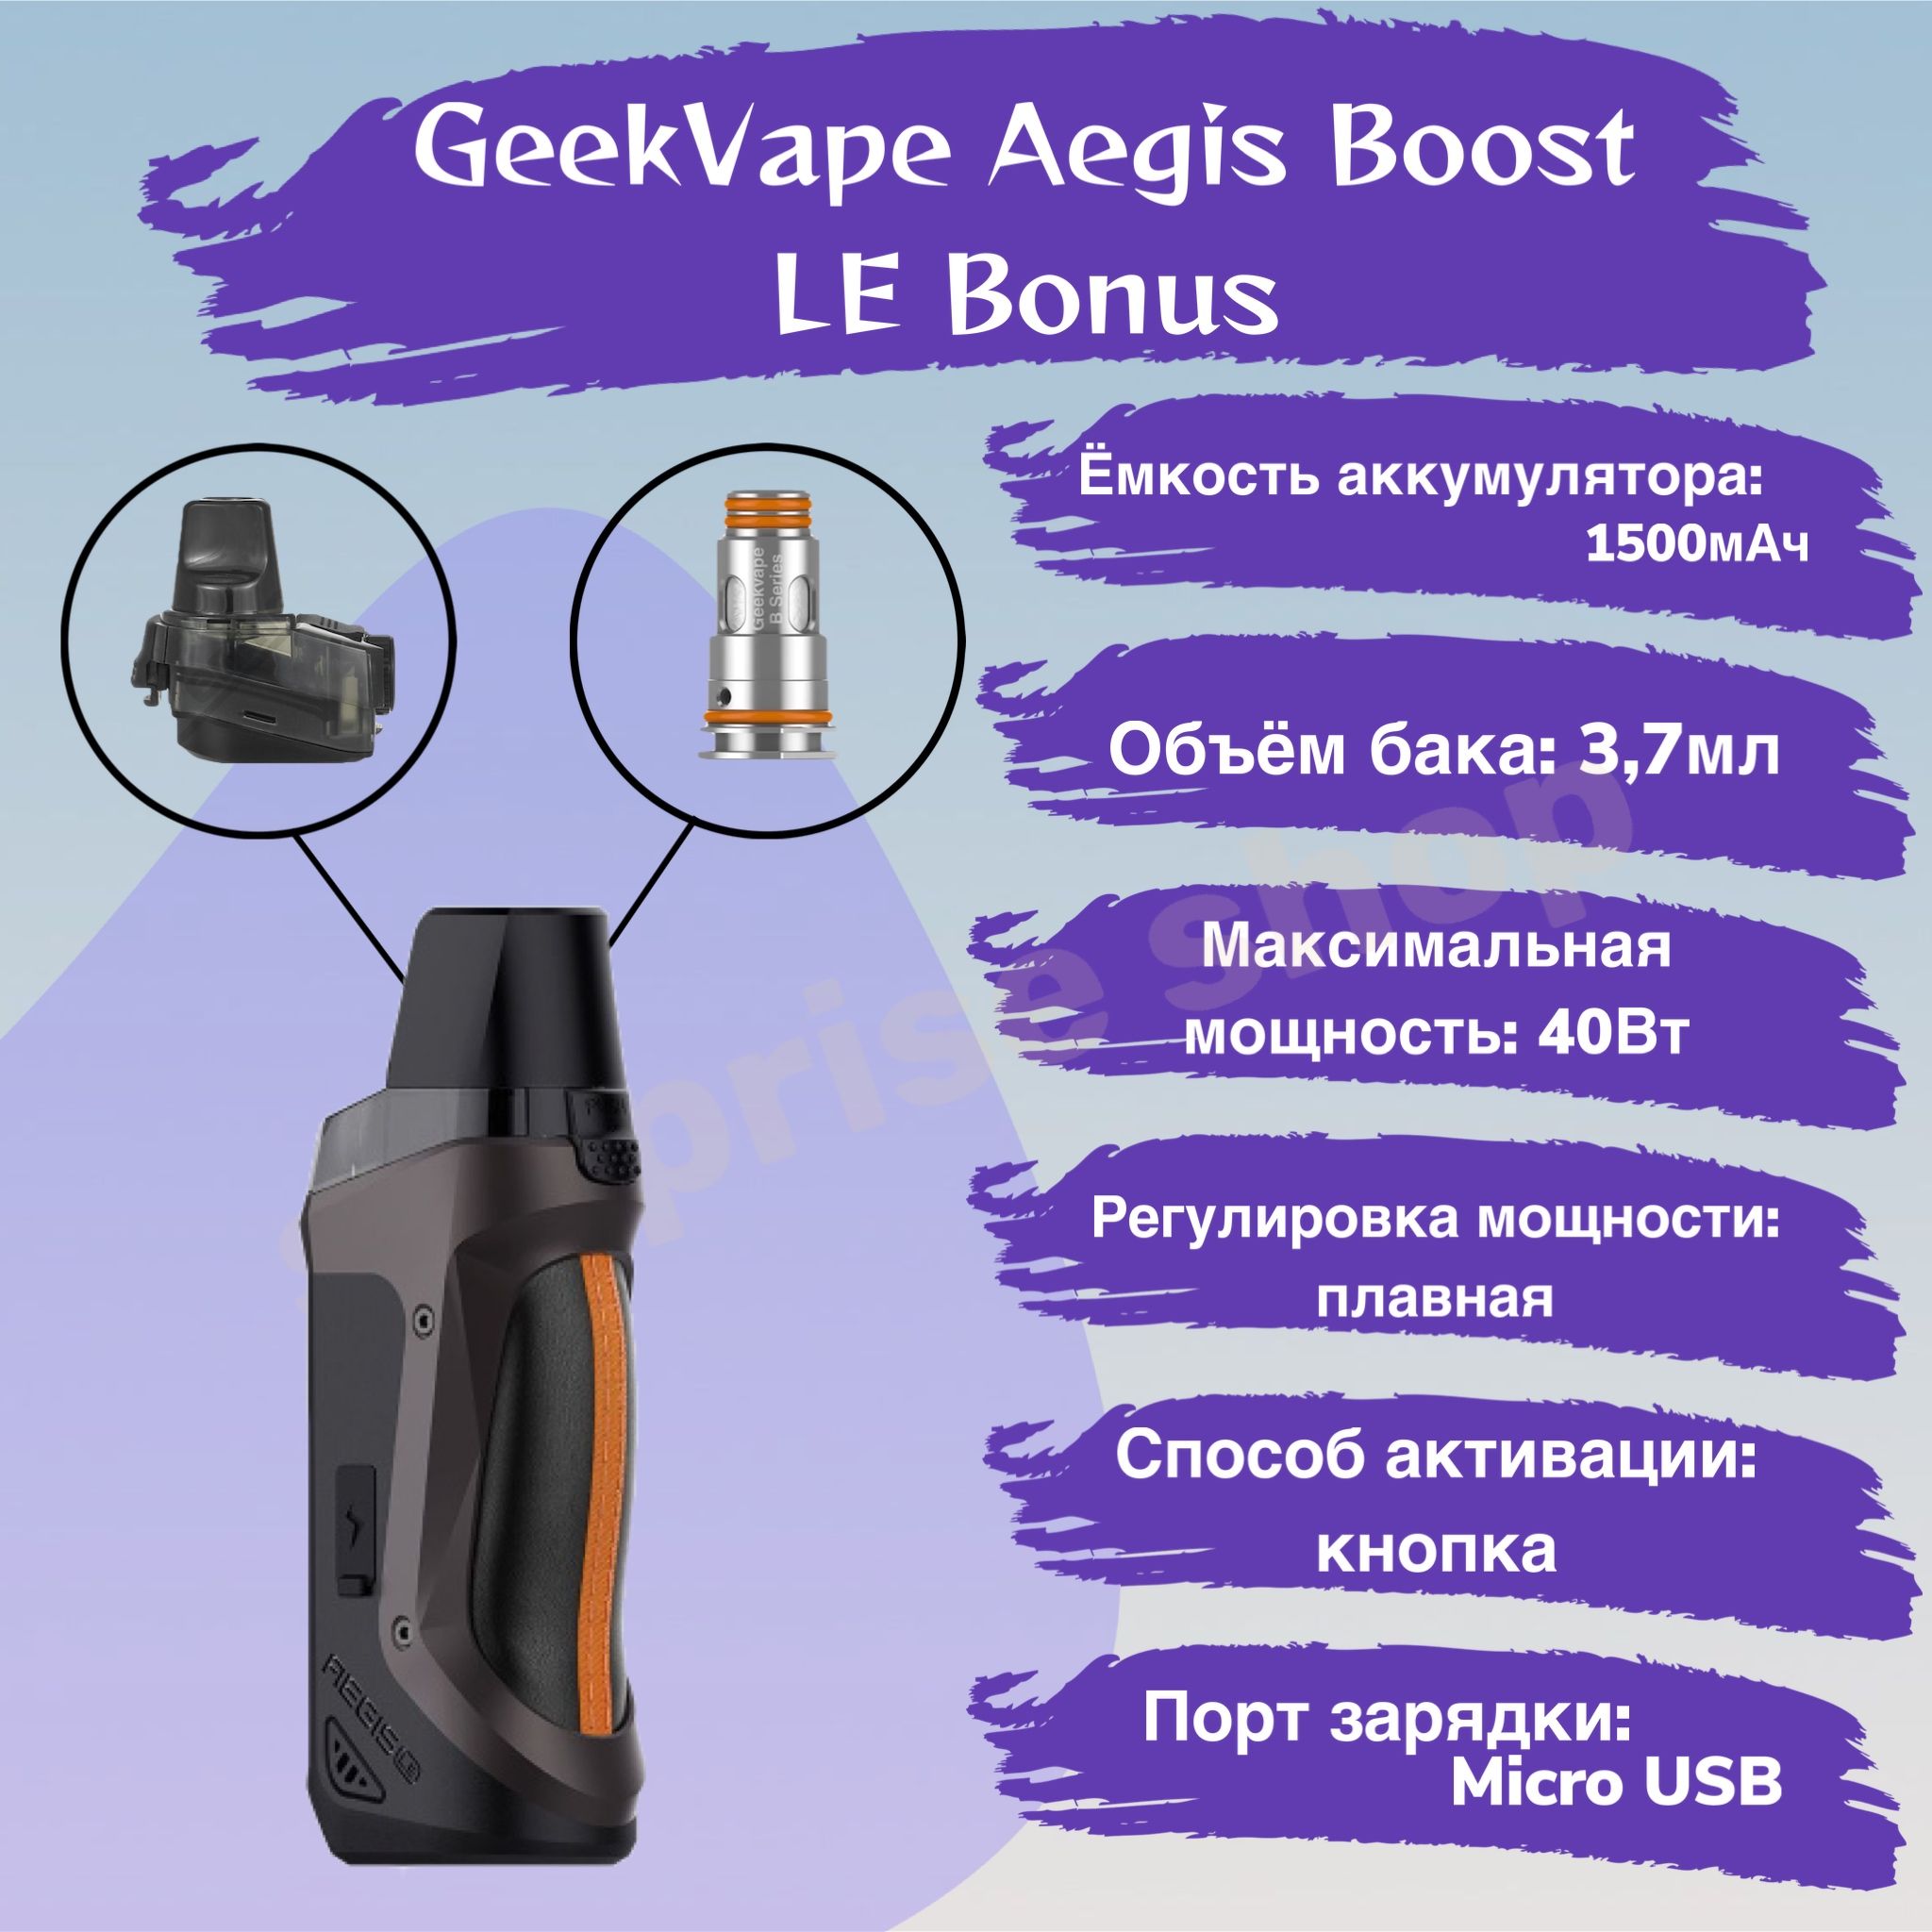 Аегис буст кнопки. Набор Geek Vape Aegis Boost le Bonus 1500mah. GEEKVAPE Aegis Boost Kit Luxury Edition. Pod Aegis Boost le. Pod-система GEEKVAPE Aegis Boost le Bonus.